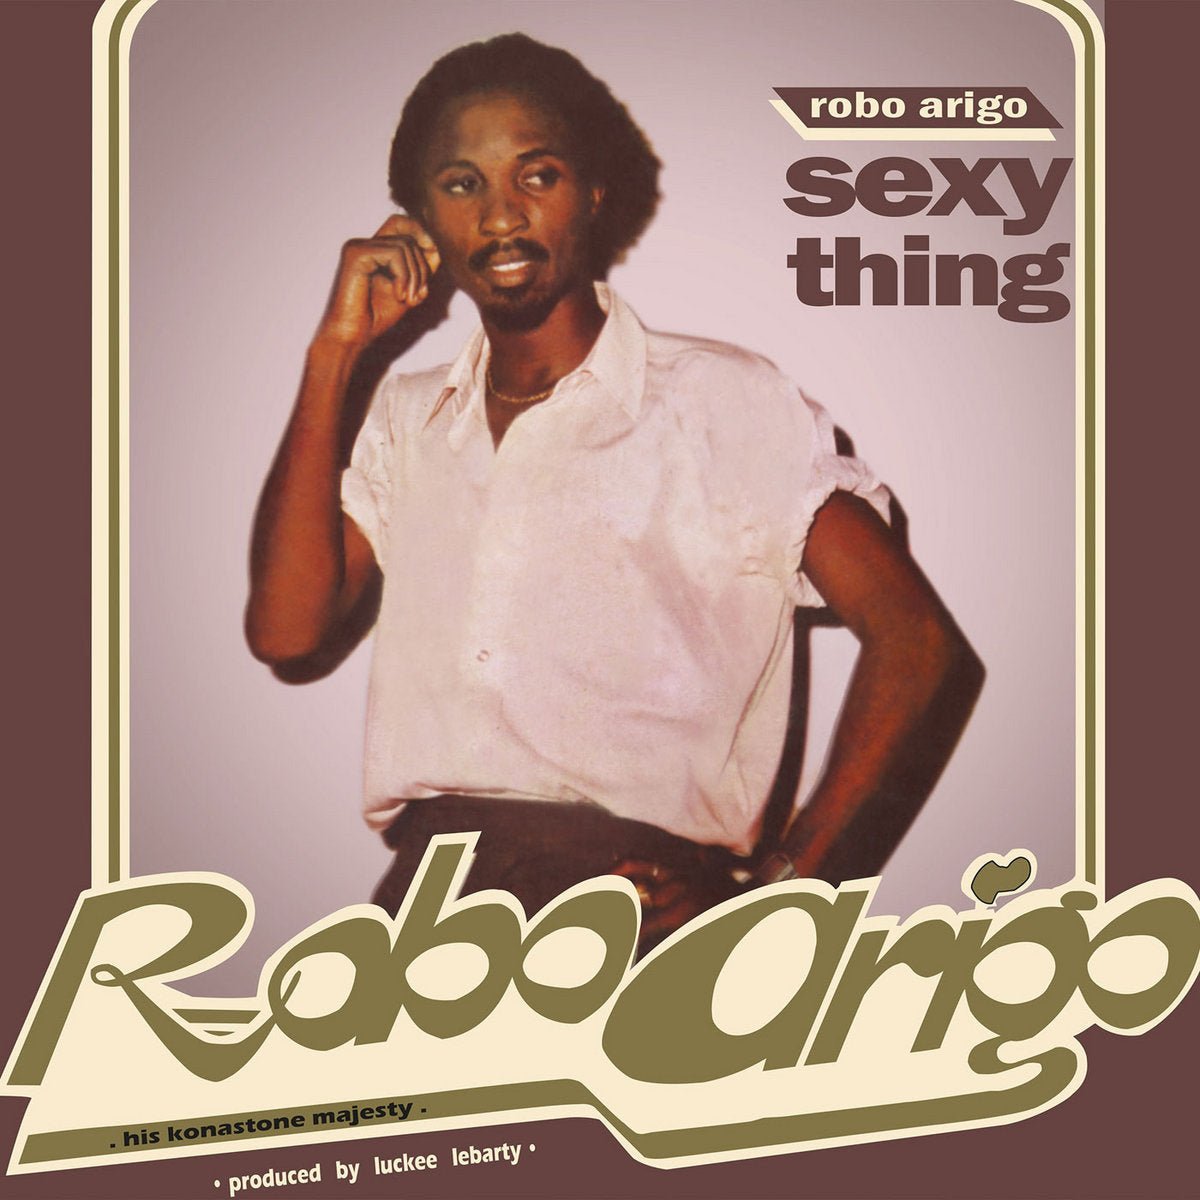 Arigo, Robo -& His Konastone Majesty - Sexy Thing - 33RPM